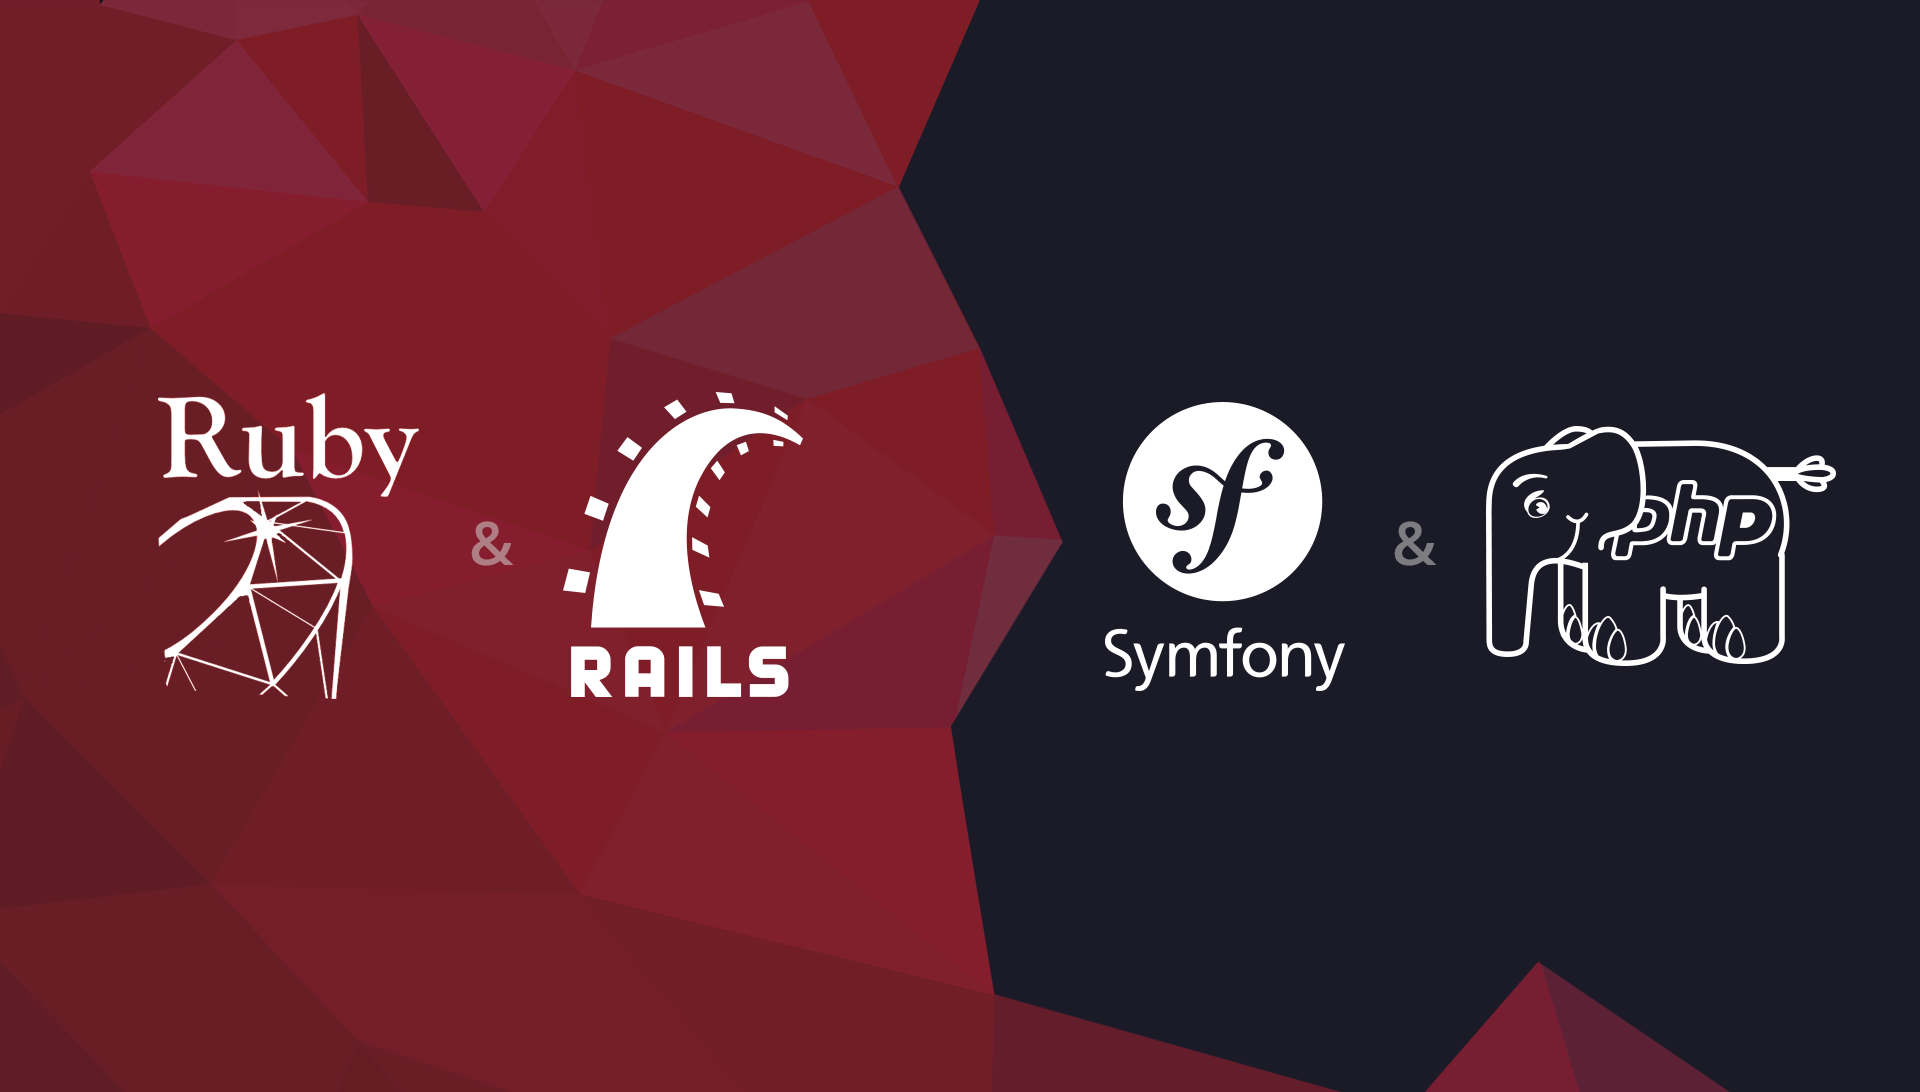 Ruby on Rails. Ruby on Rails язык программирования. Фреймворке Ruby on Rails. Ruby on Rails logo. Руби руби руби руби клип